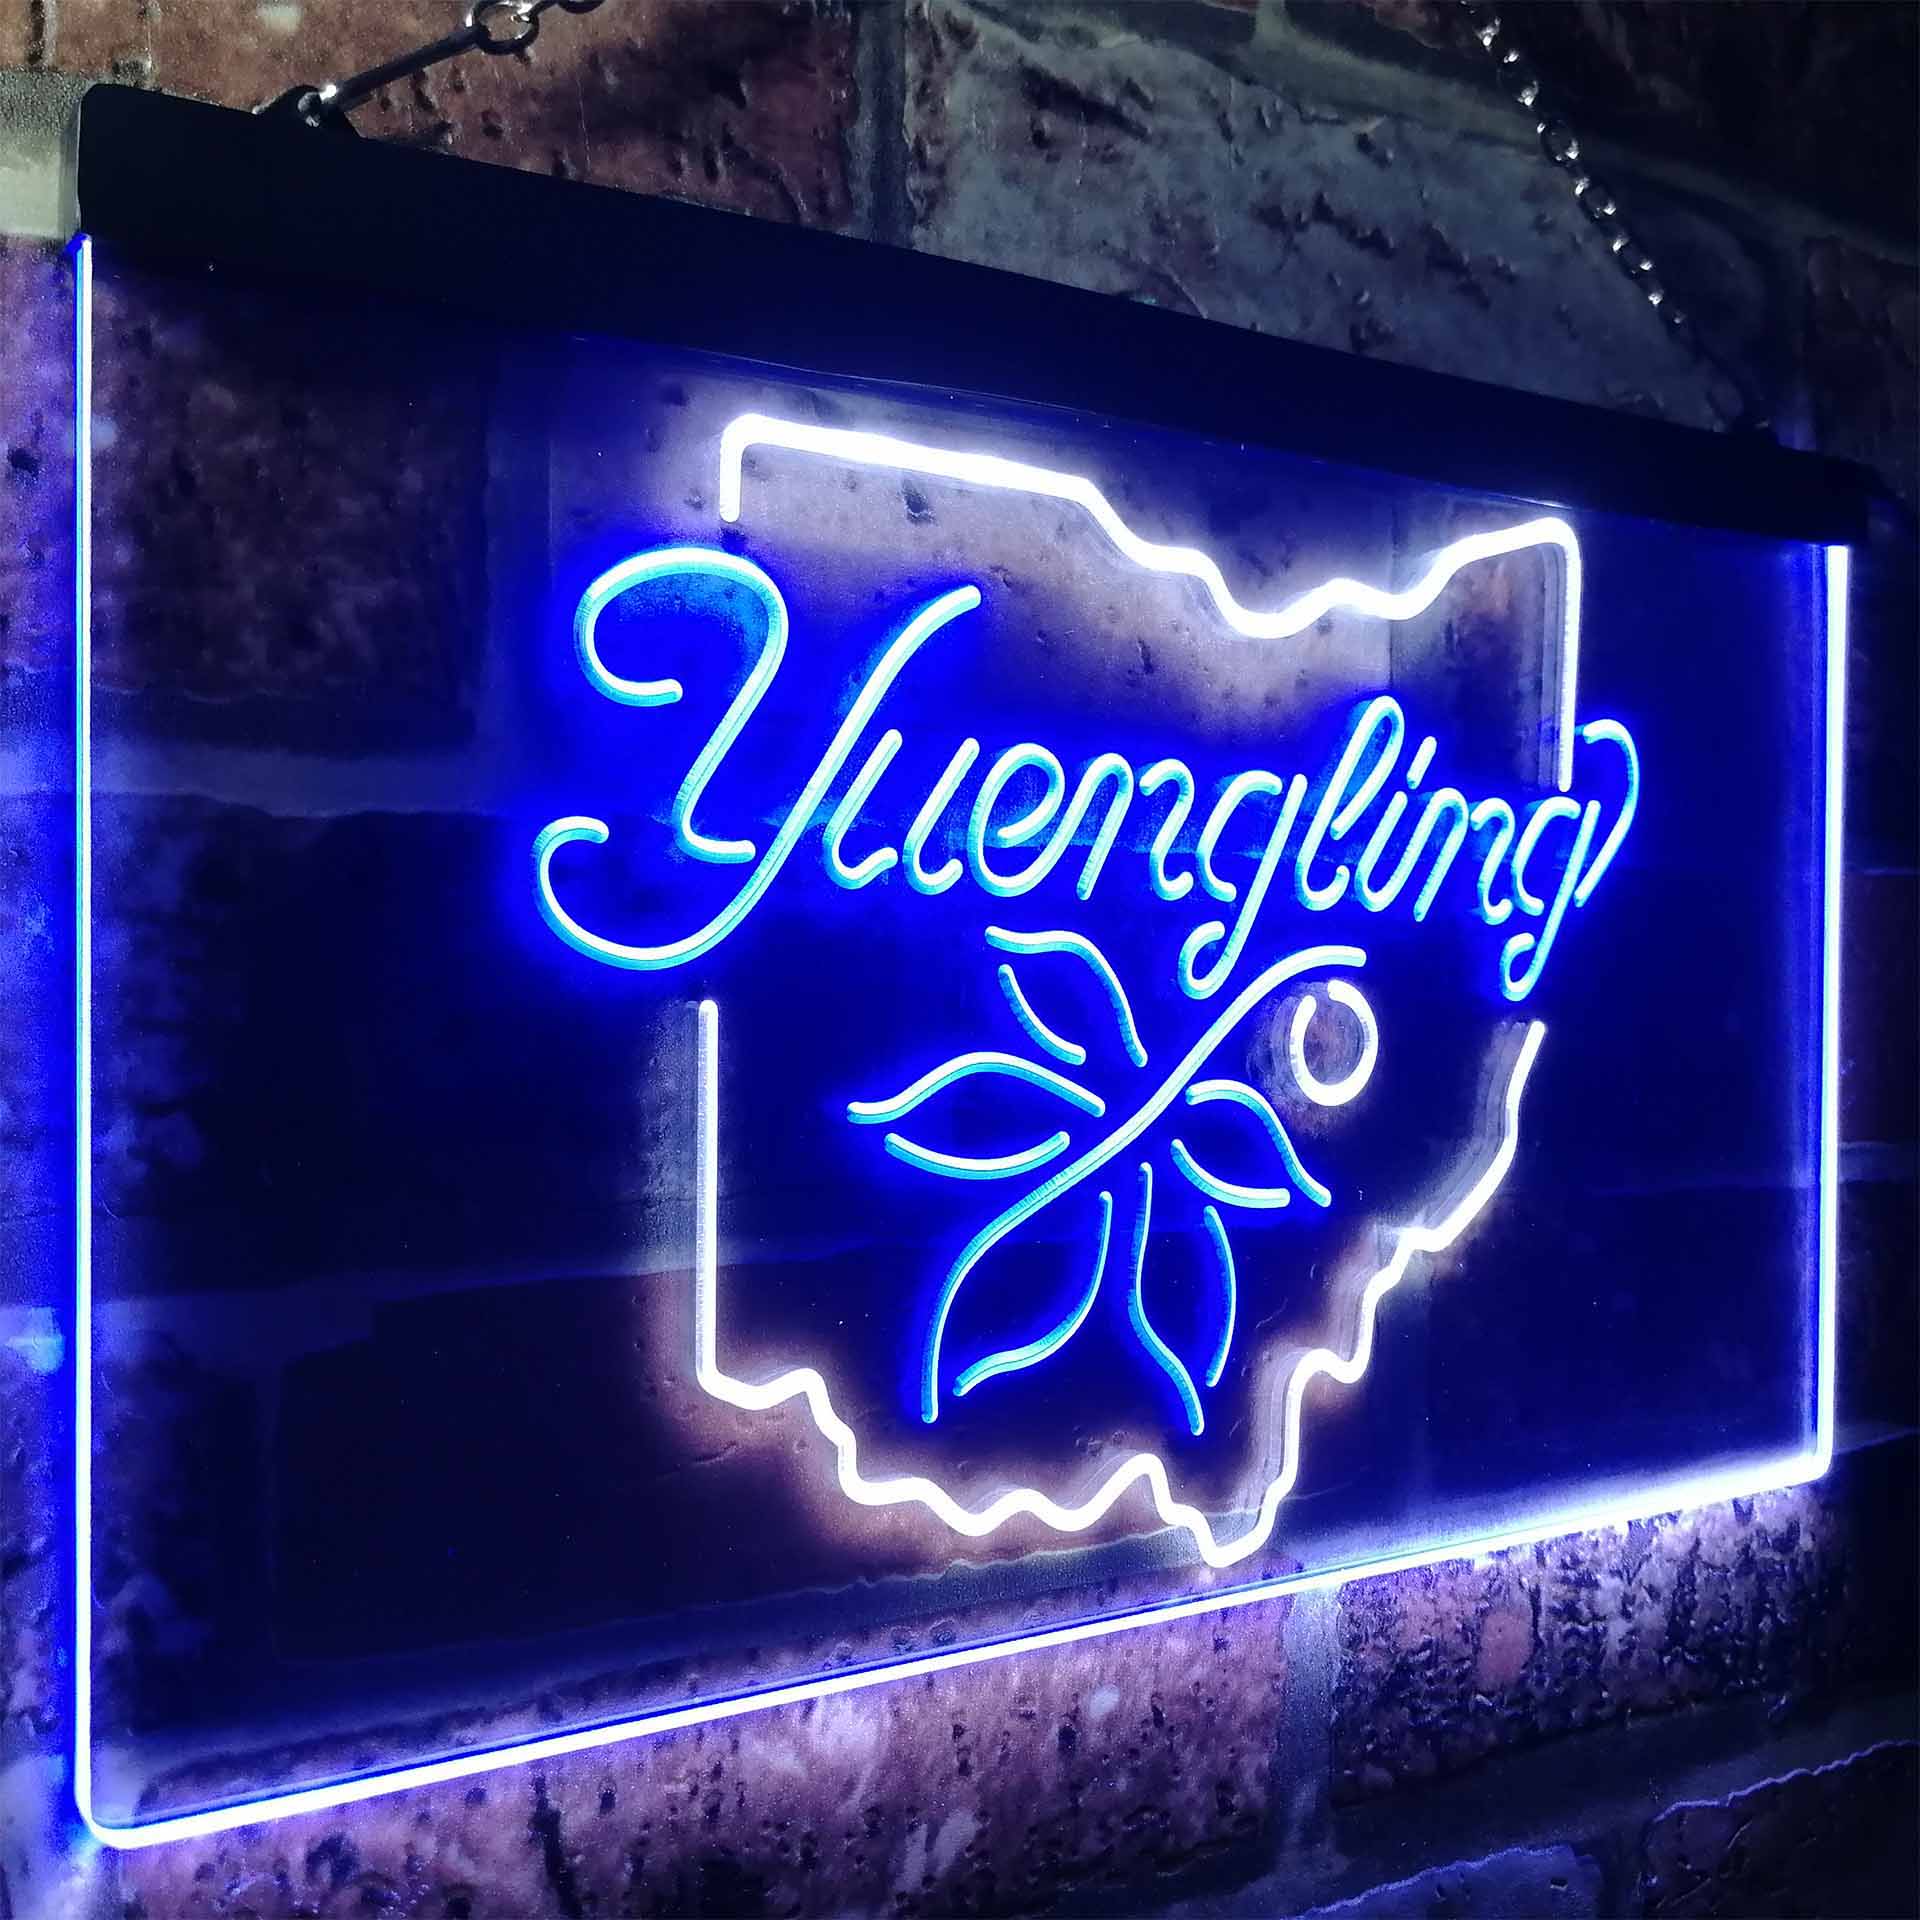 Yuengling Ohio State Buckeye Larger Beer Neon LED Sign